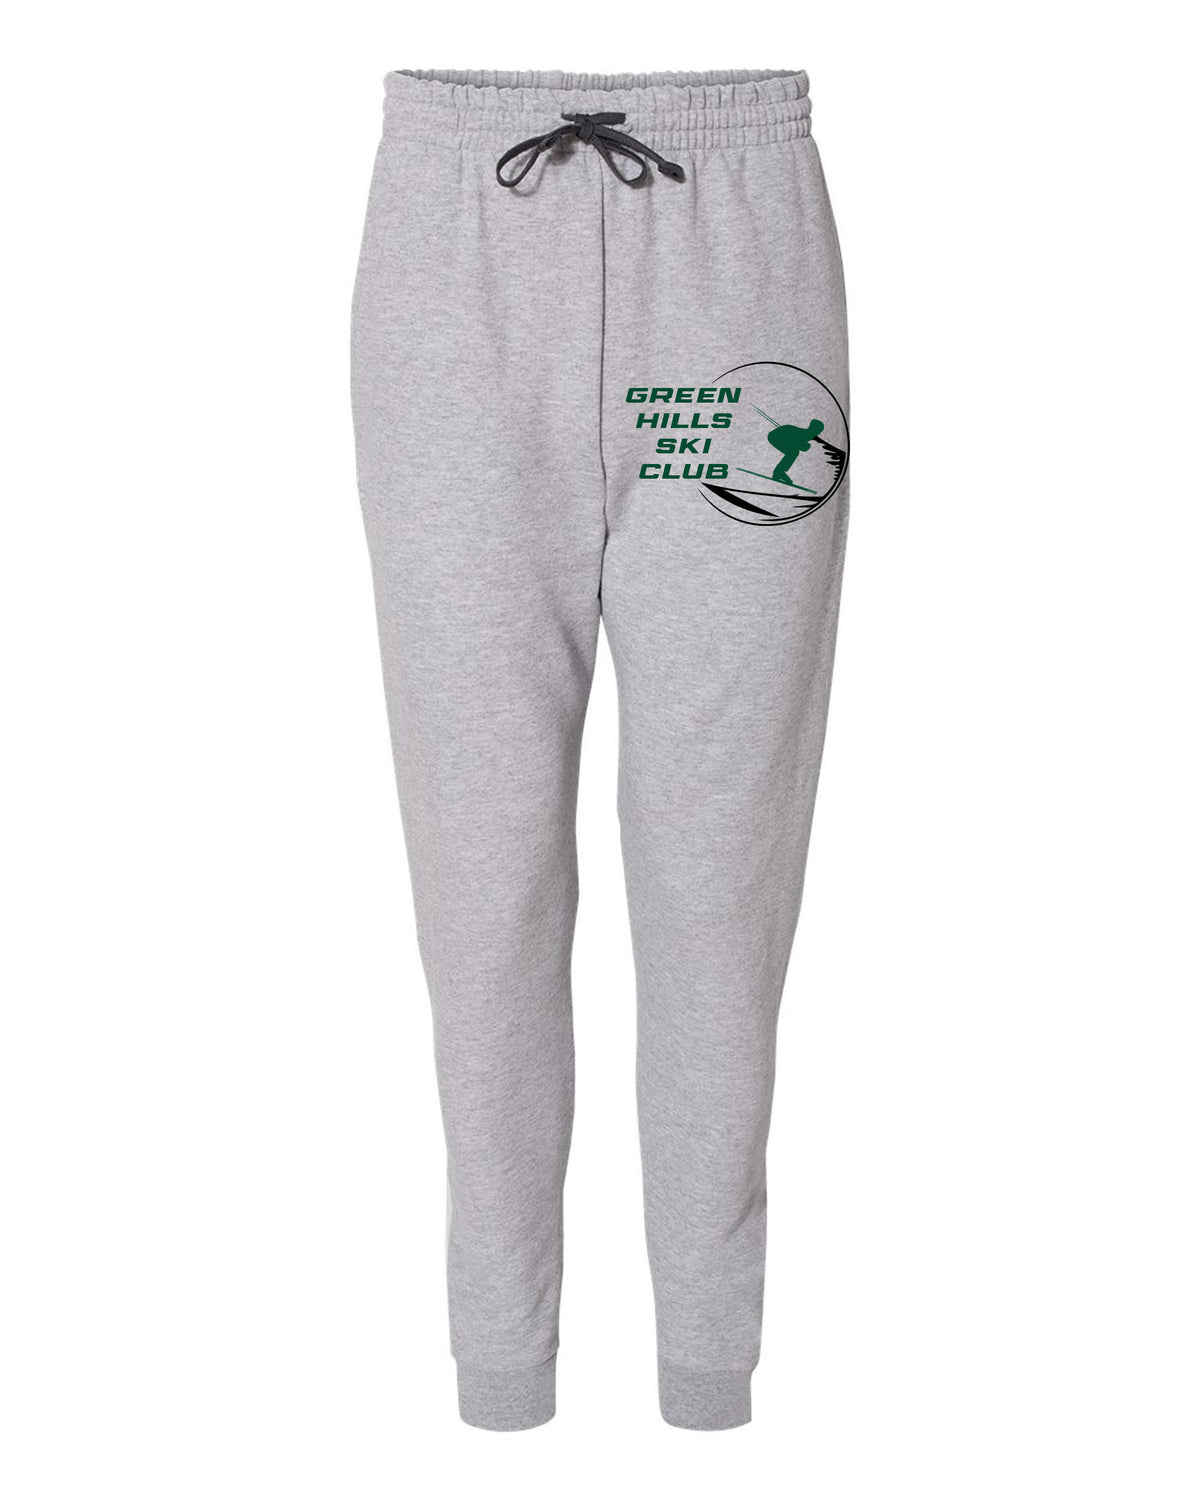 Green Hills Ski Club Design 1 Sweatpants